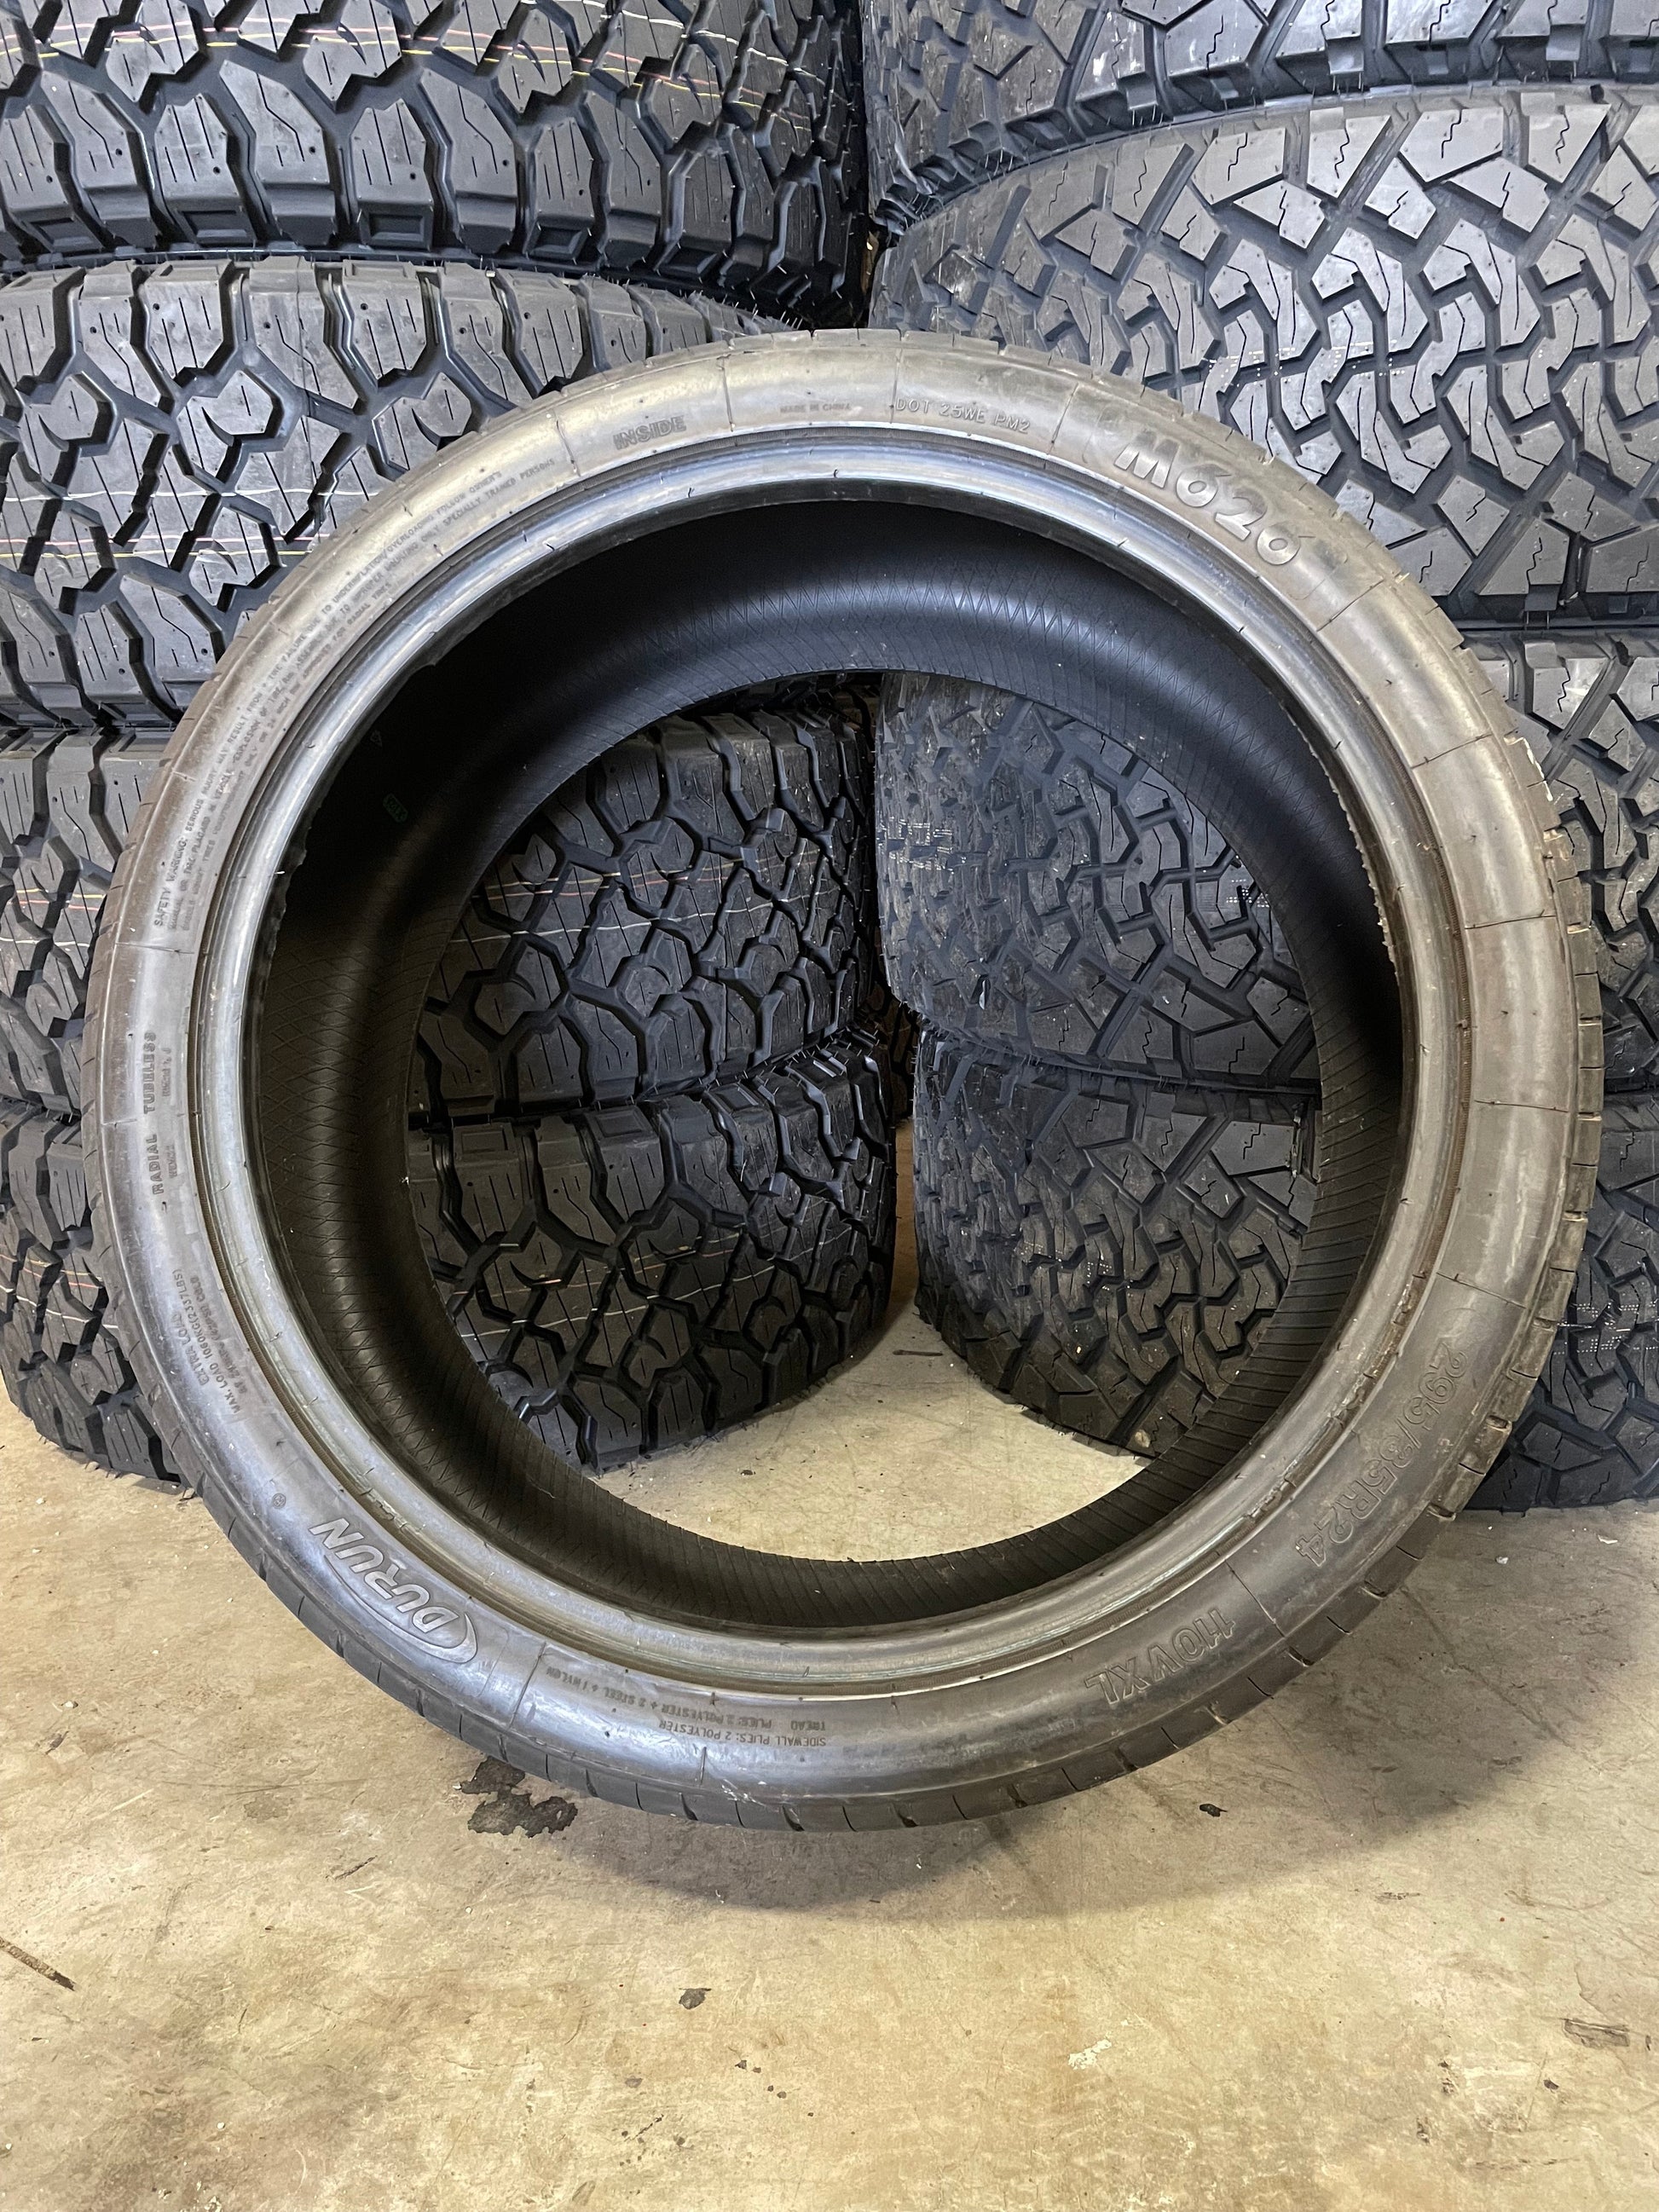 PAIR OF 295/35R24 Durun M626 110V XL - Used Tires